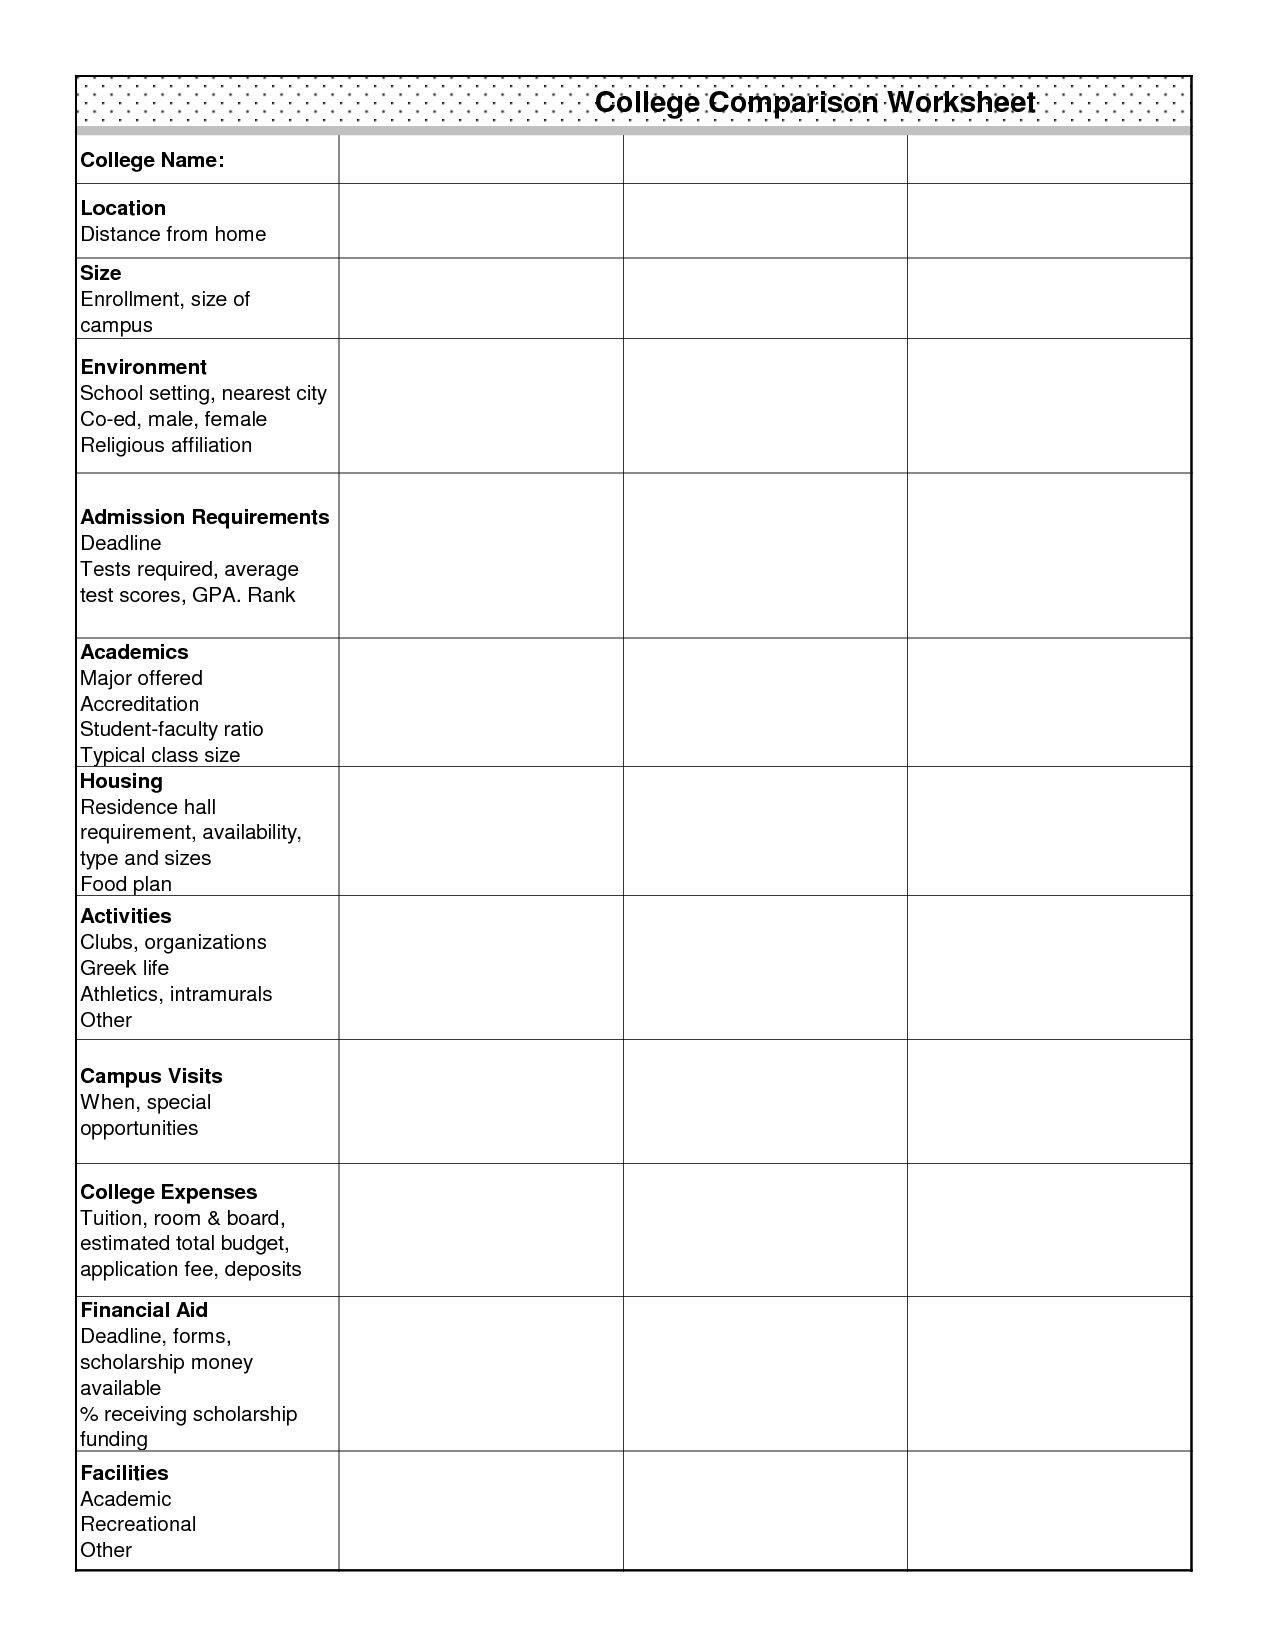 Medical School Comparison Chart | College Comparison Chart - Excel | Printable College Comparison Worksheet